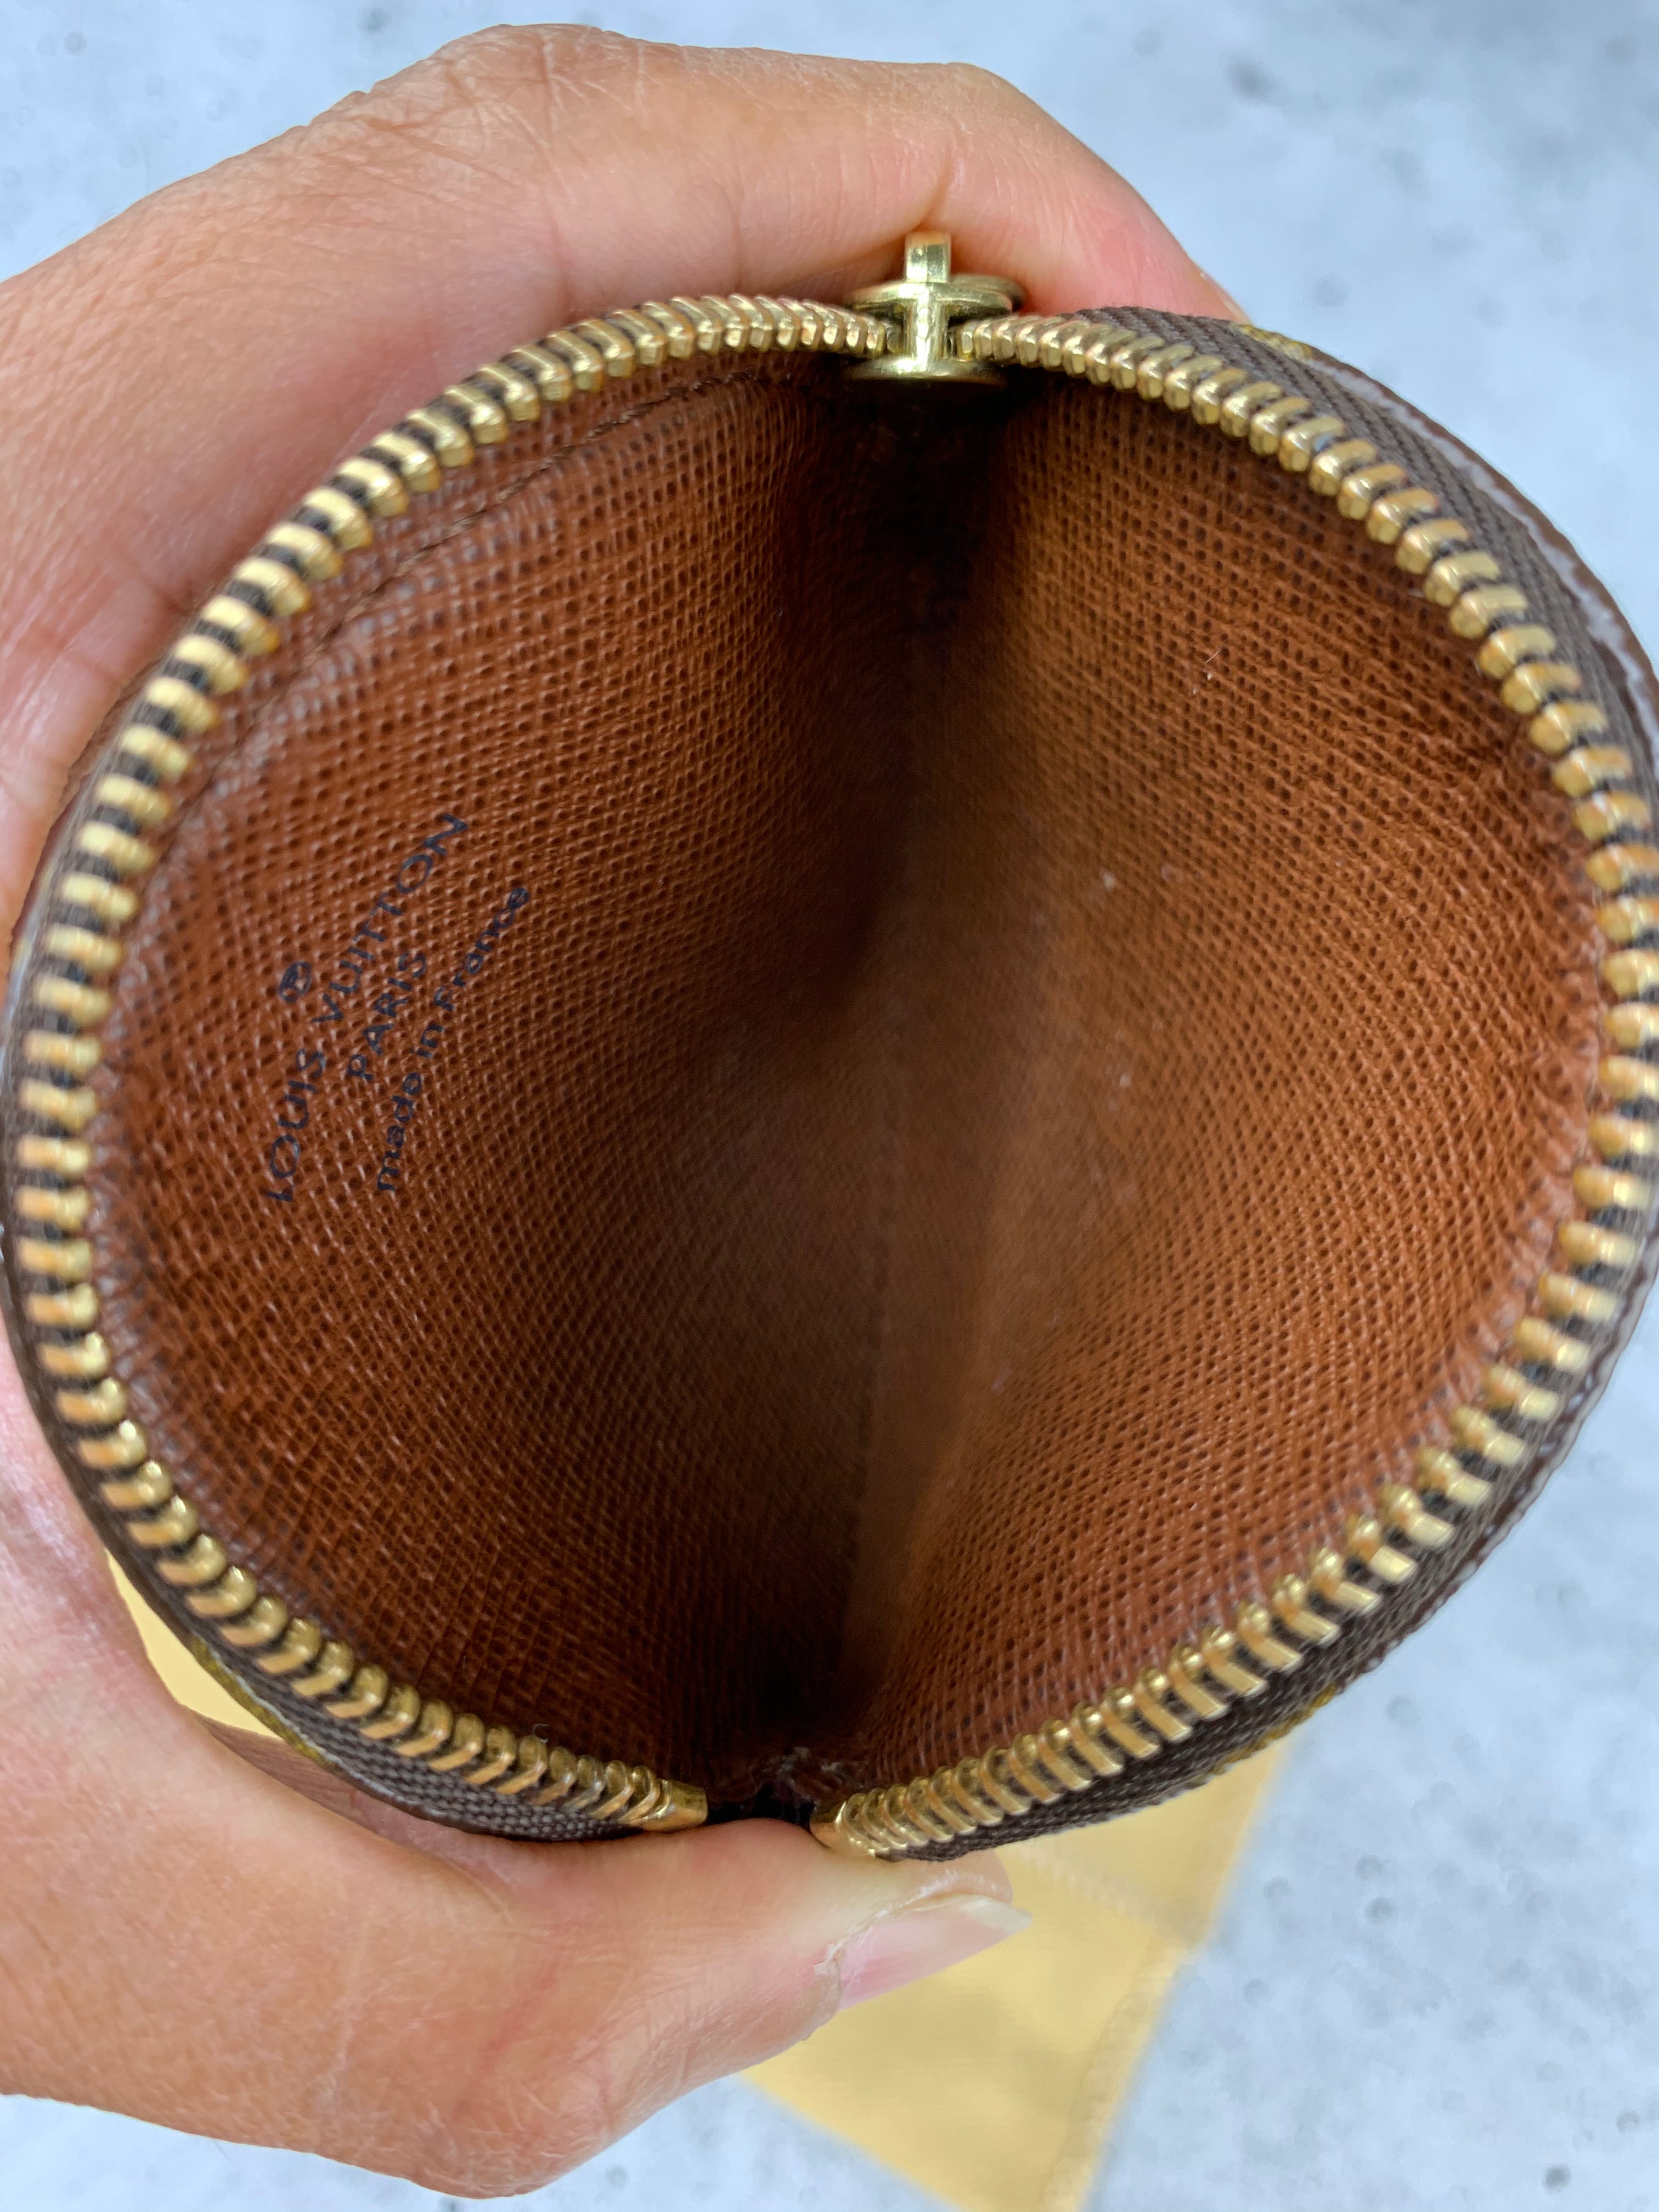 Louis Vuitton Round Coin Purse - 12 For Sale on 1stDibs  louis vuitton  coin purse round monogram brown, lv round coin purse discontinued, louis  vuitton circle coin purse